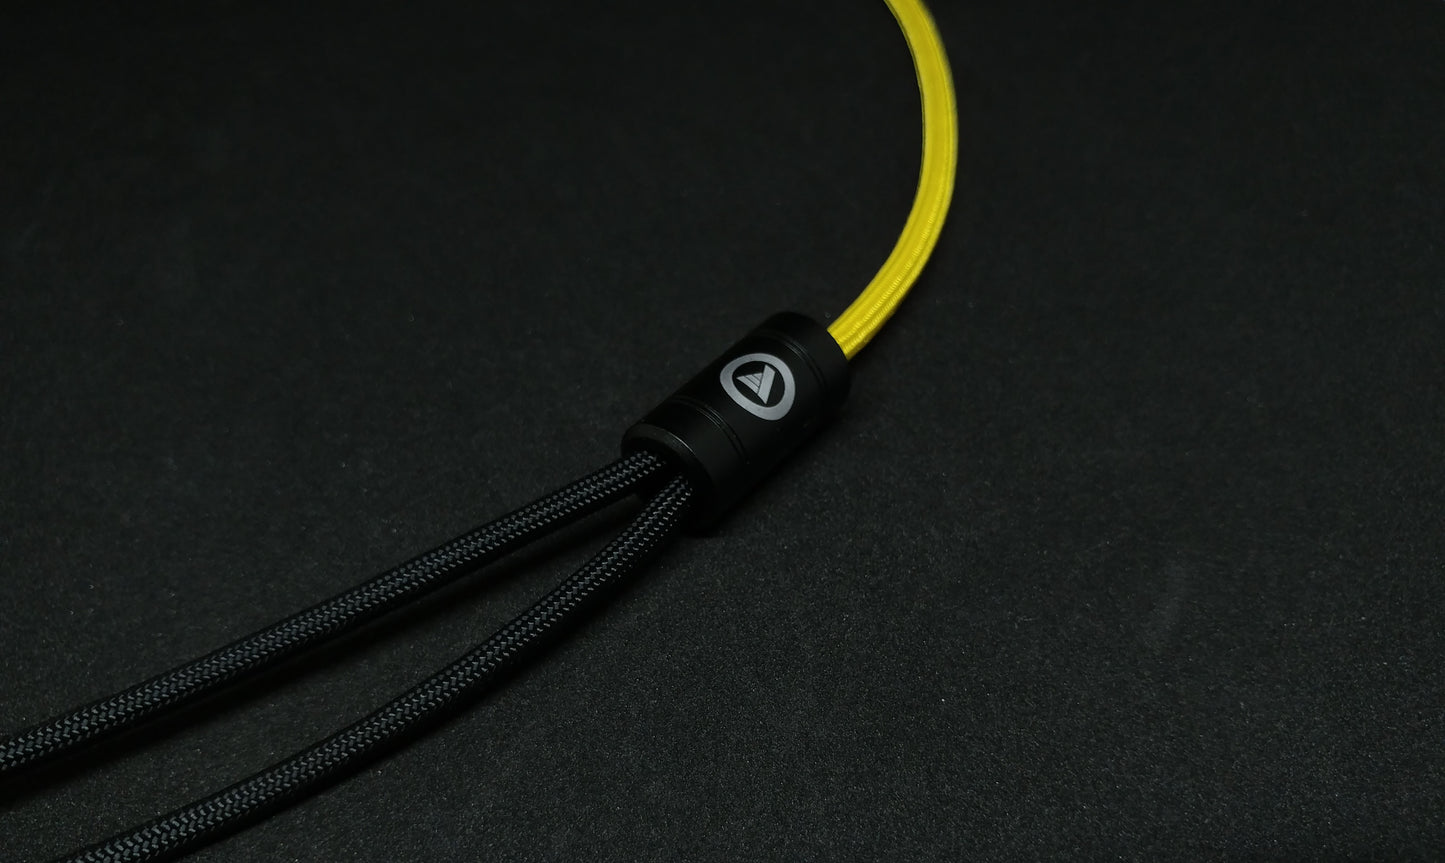 Custom Headphone Amplifier Adapter Cable | Air